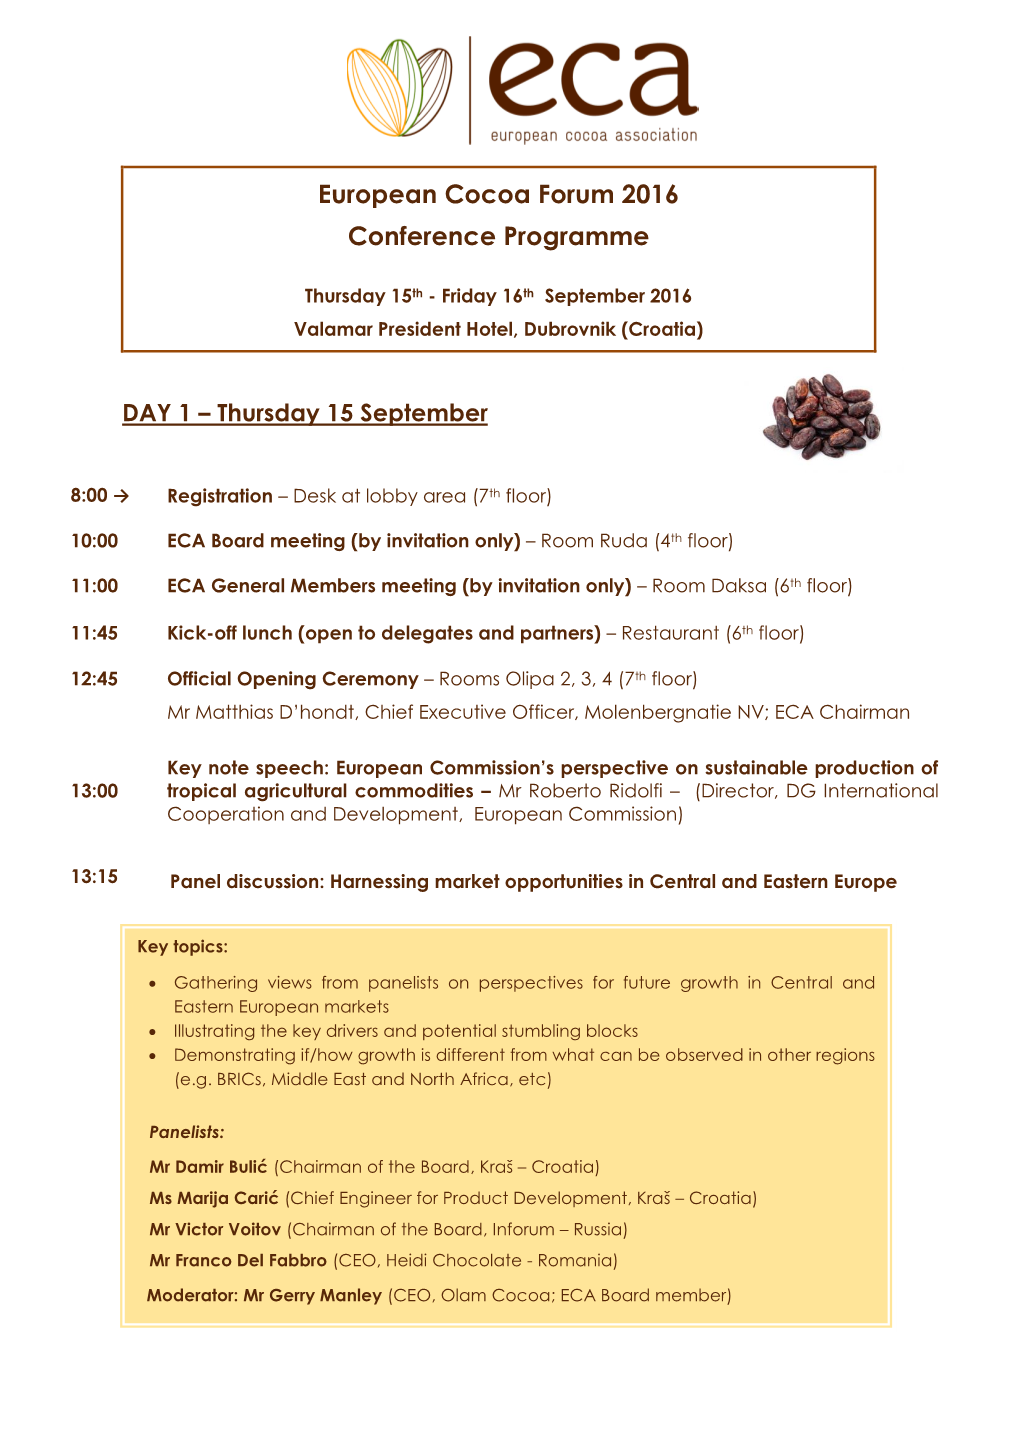 European Cocoa Forum 2016 Conference Programme